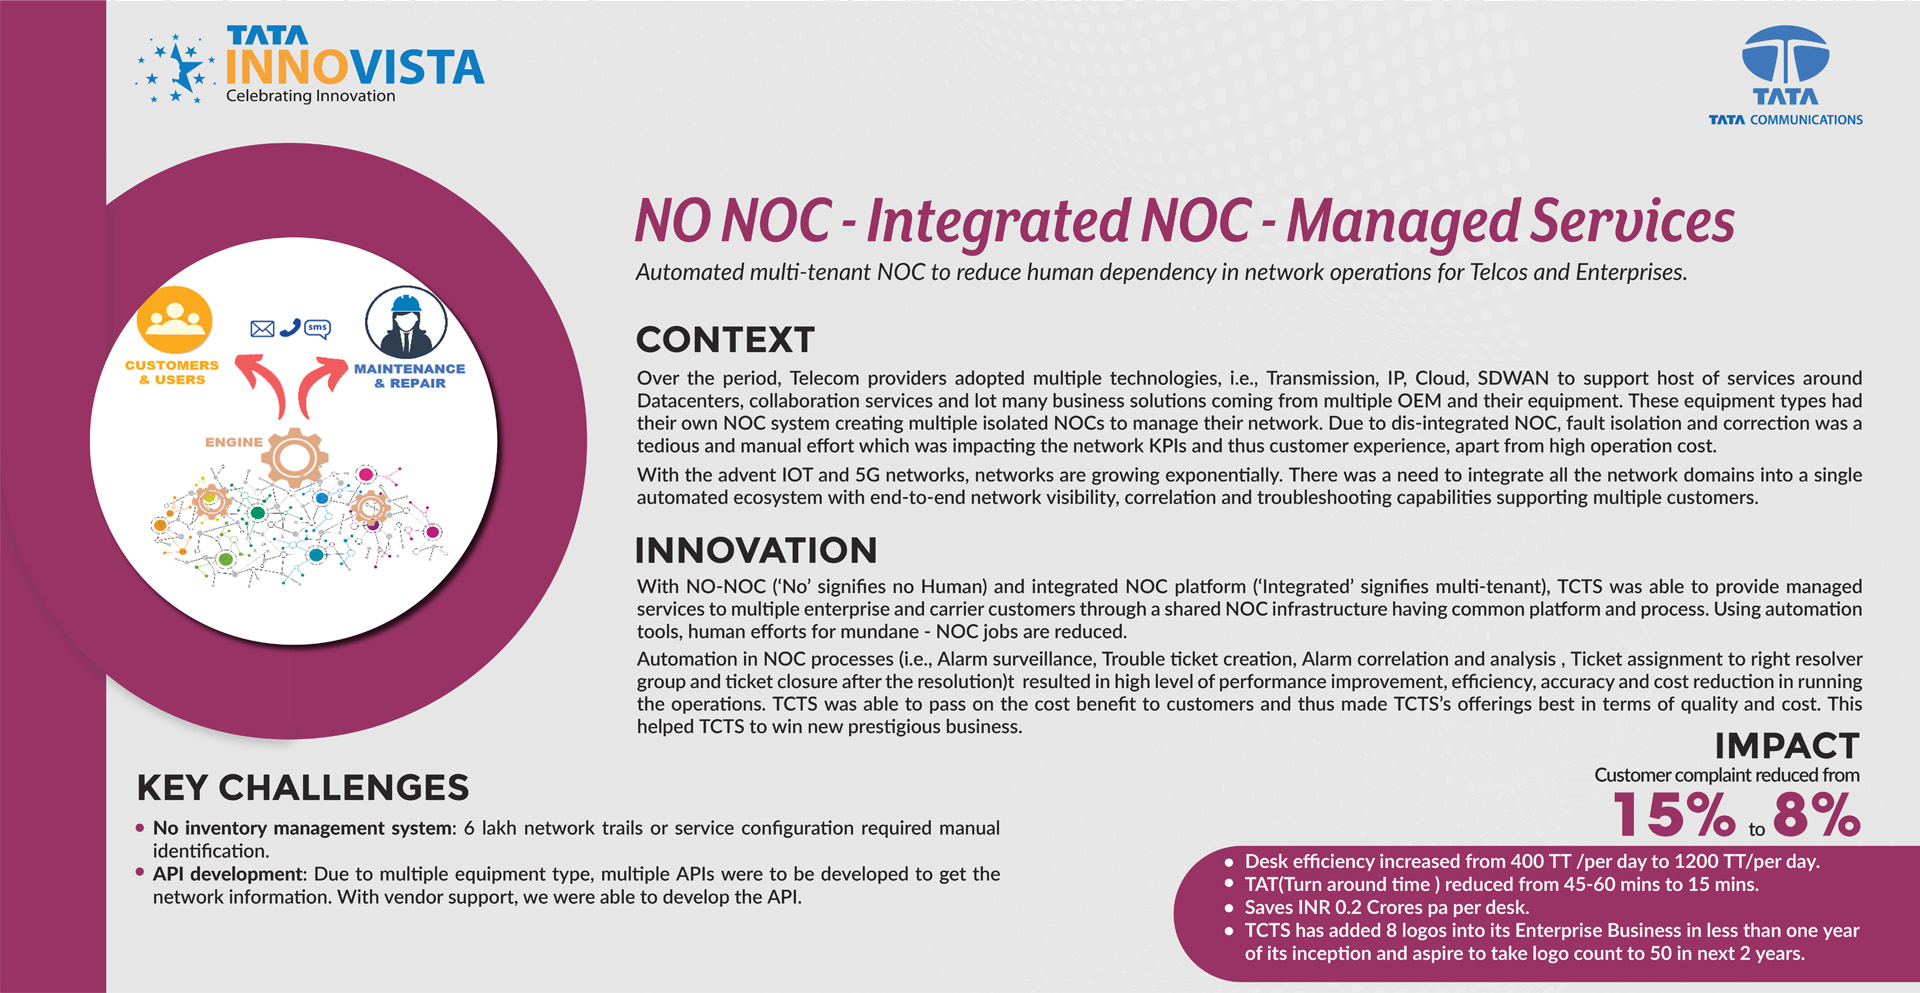 Tata Communications - No NOC Integrated NOC